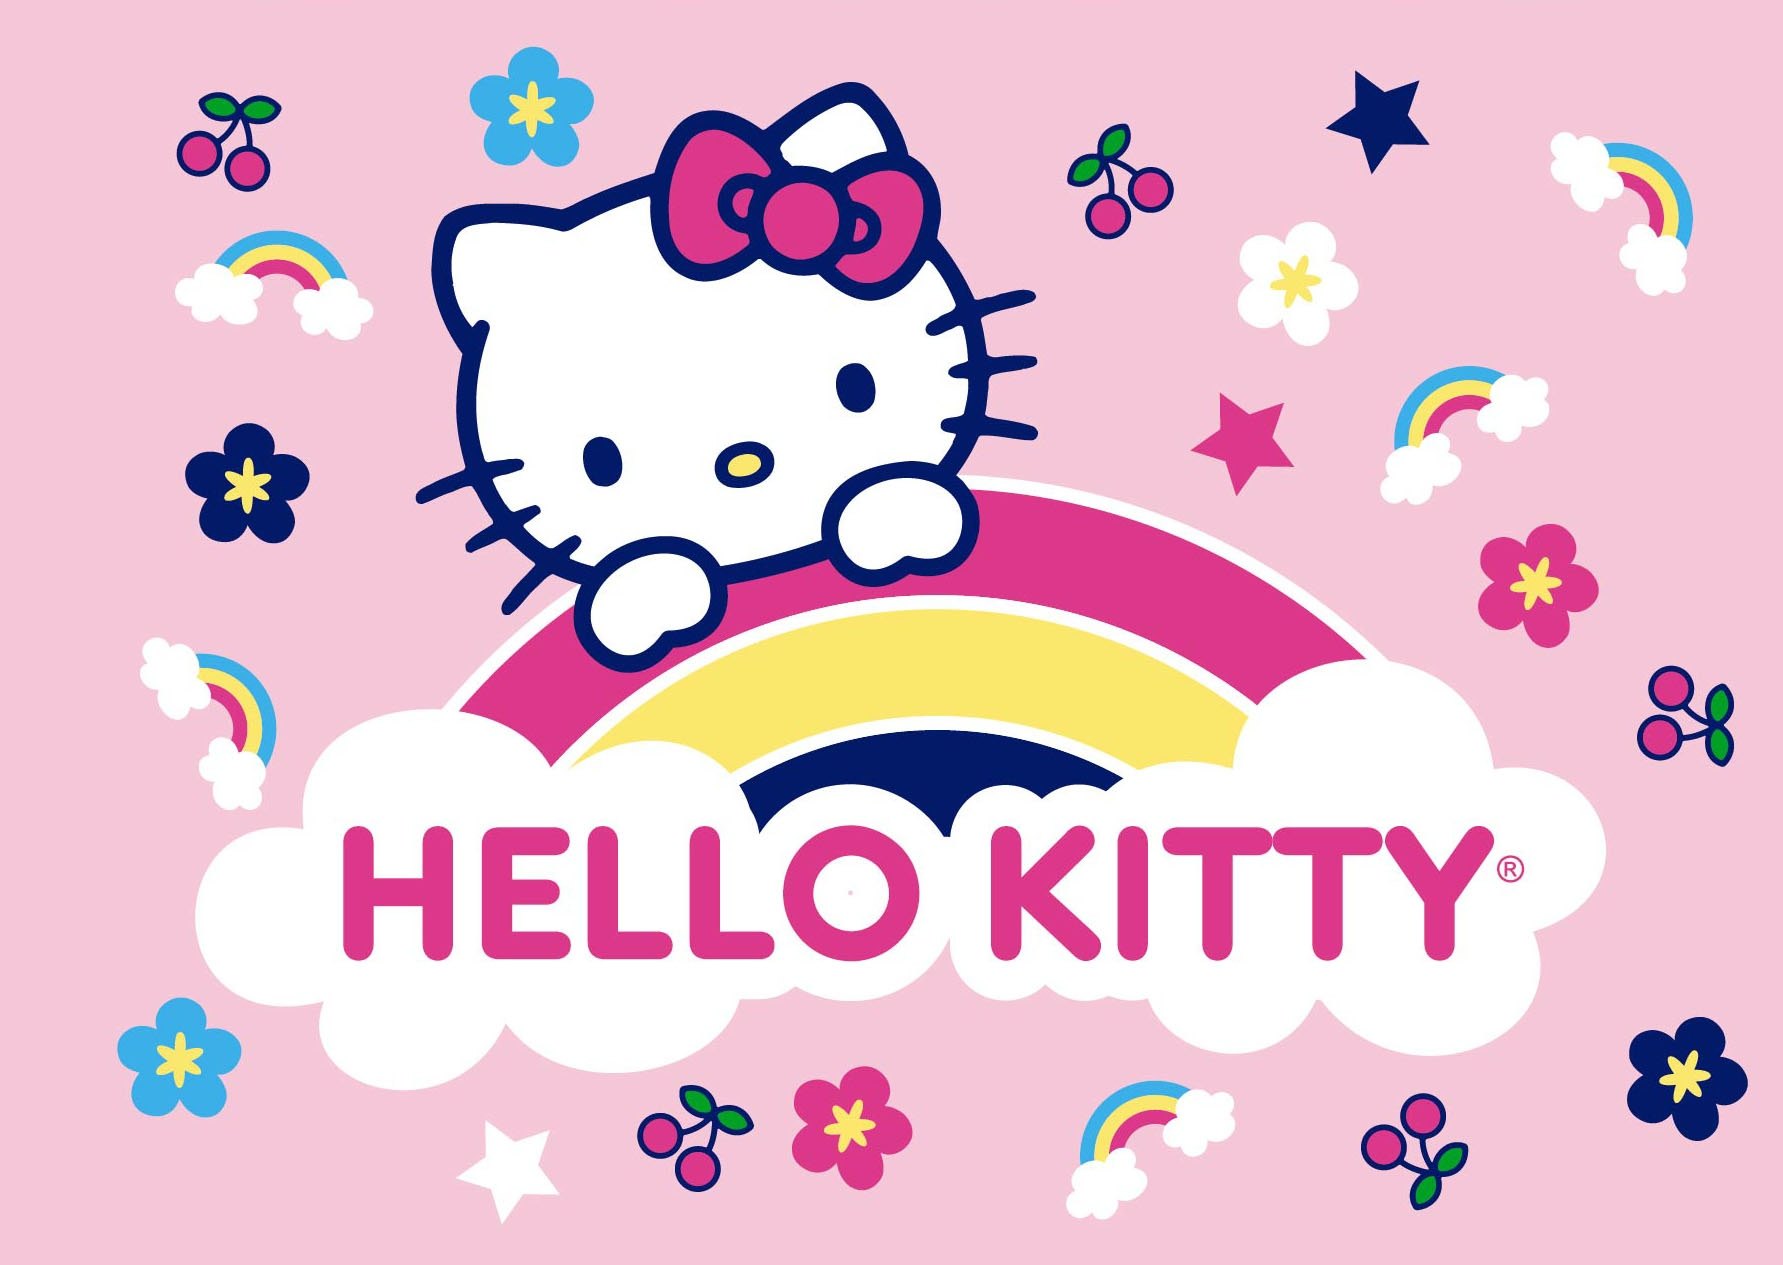 Название hello. Хелло Китти. Хеллоу Китти hello Kitty. Плакаты Хэллоу Китти. Hello Kitty логотип.